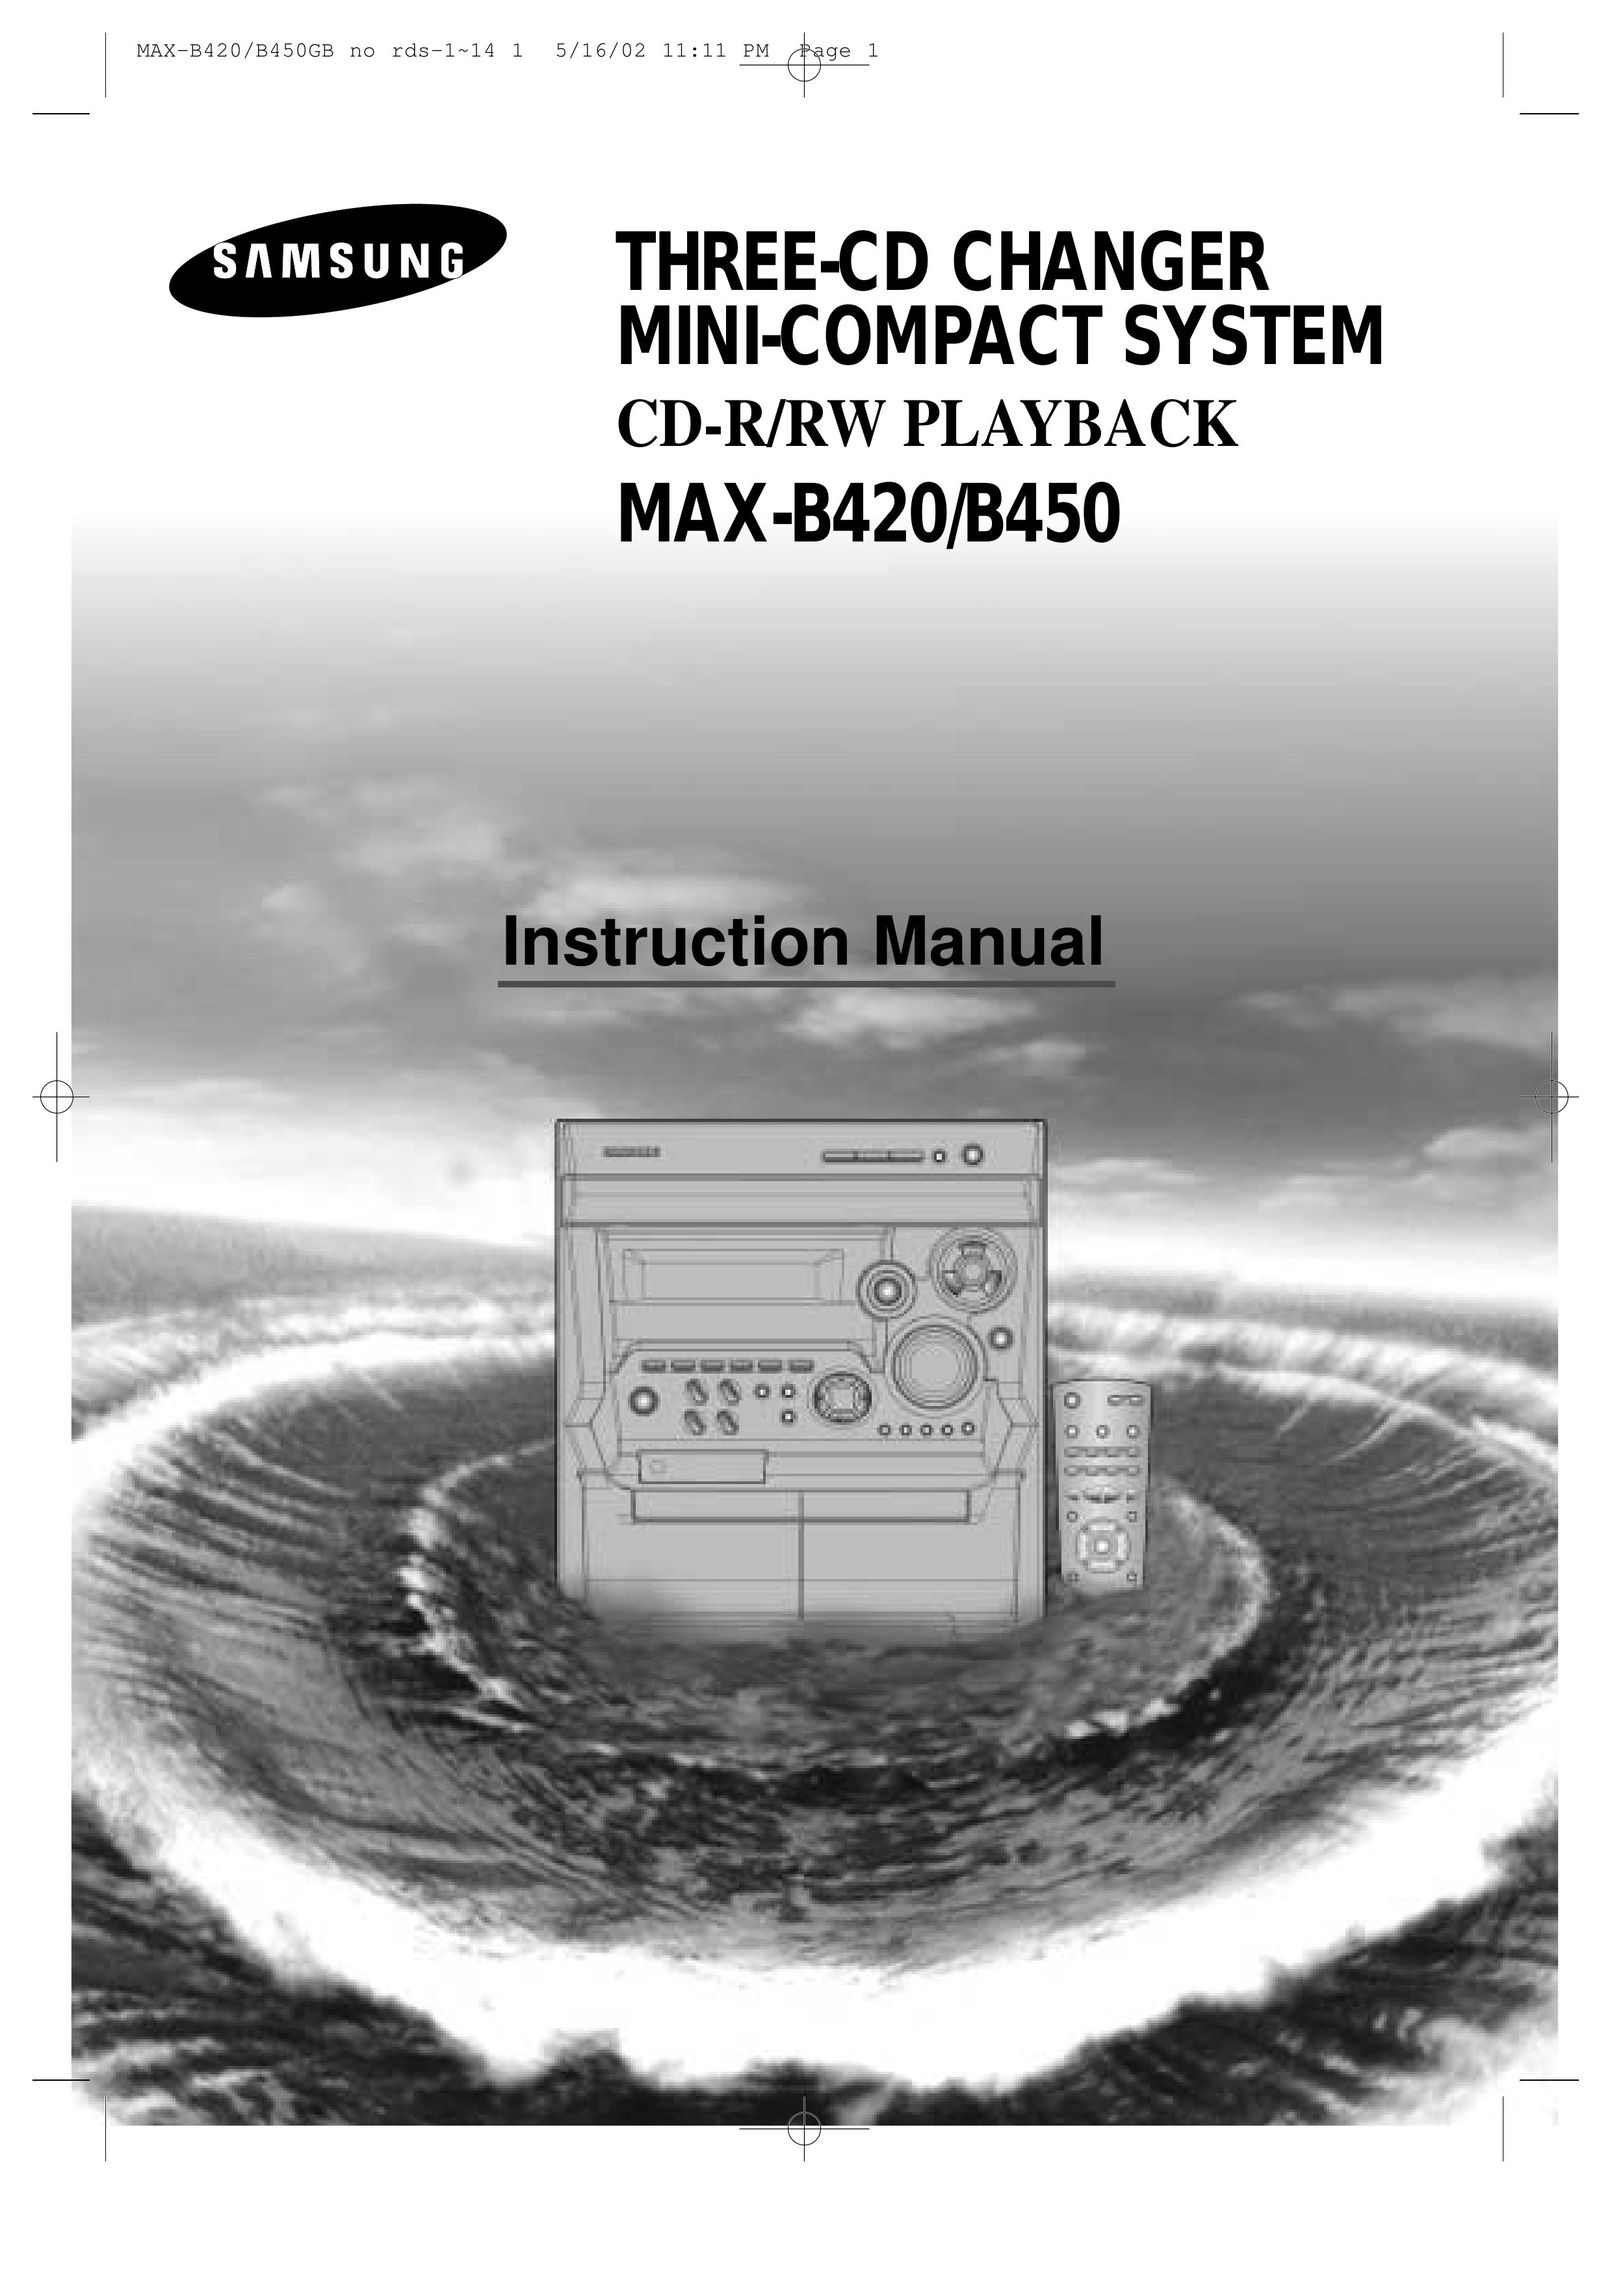 Samsung MAX-B420 CD Player User Manual